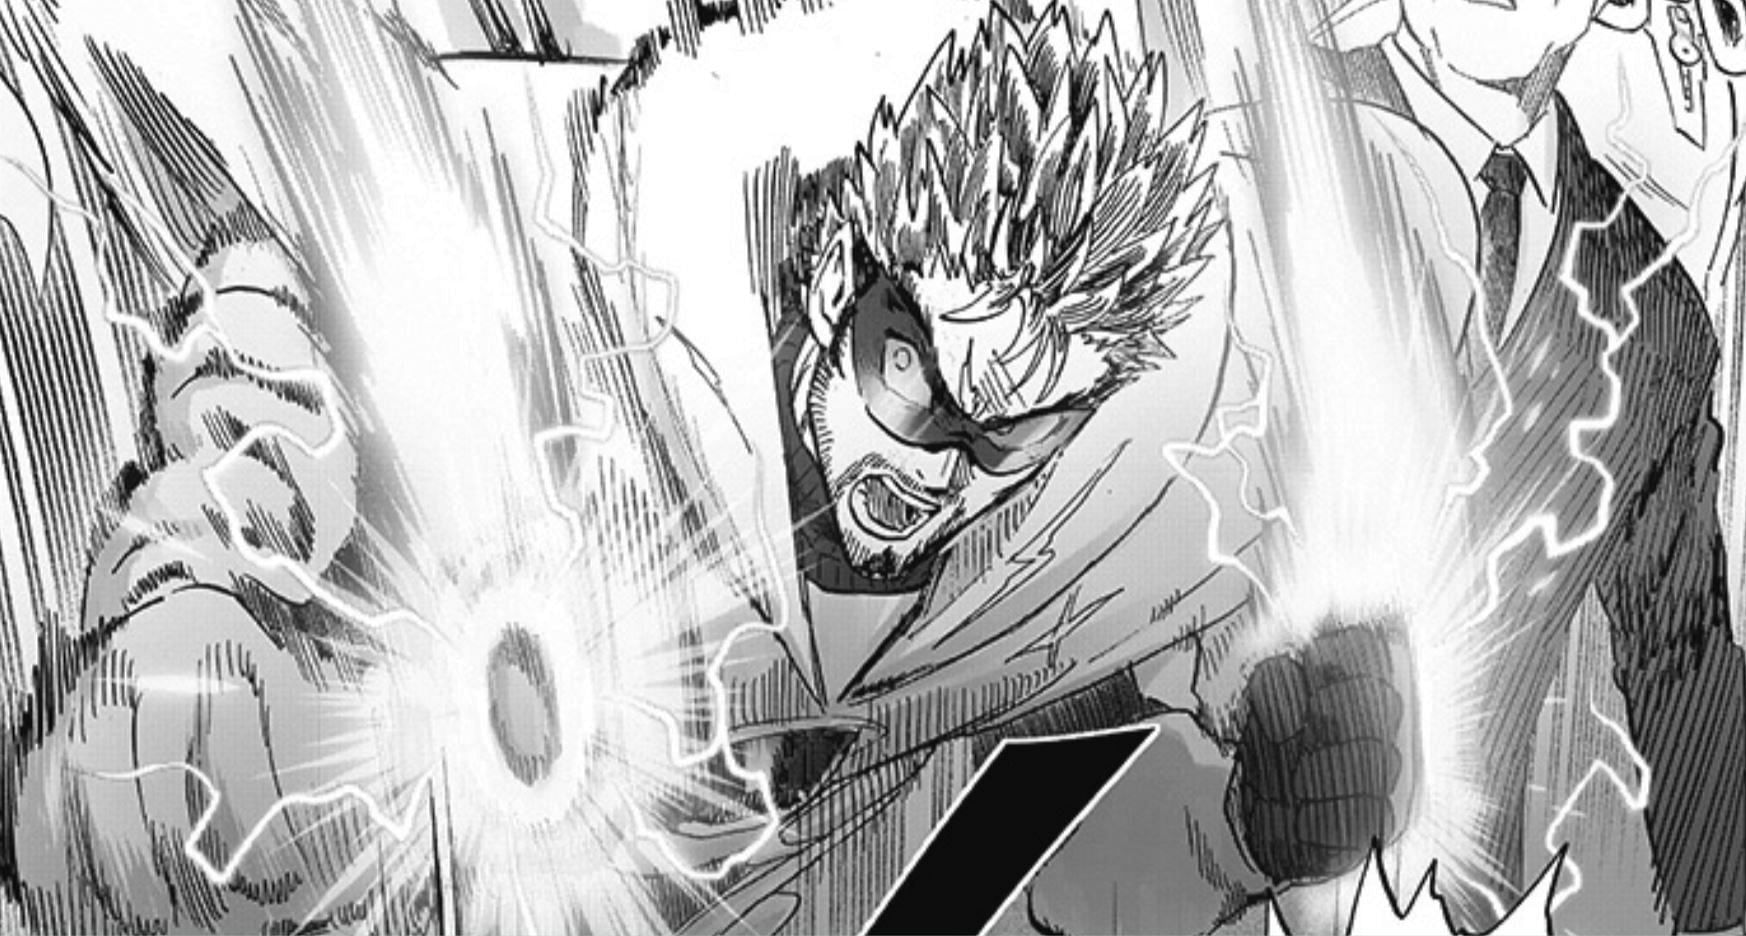 Blast as seen in the One Punch Man manga (Image via Shueisha)